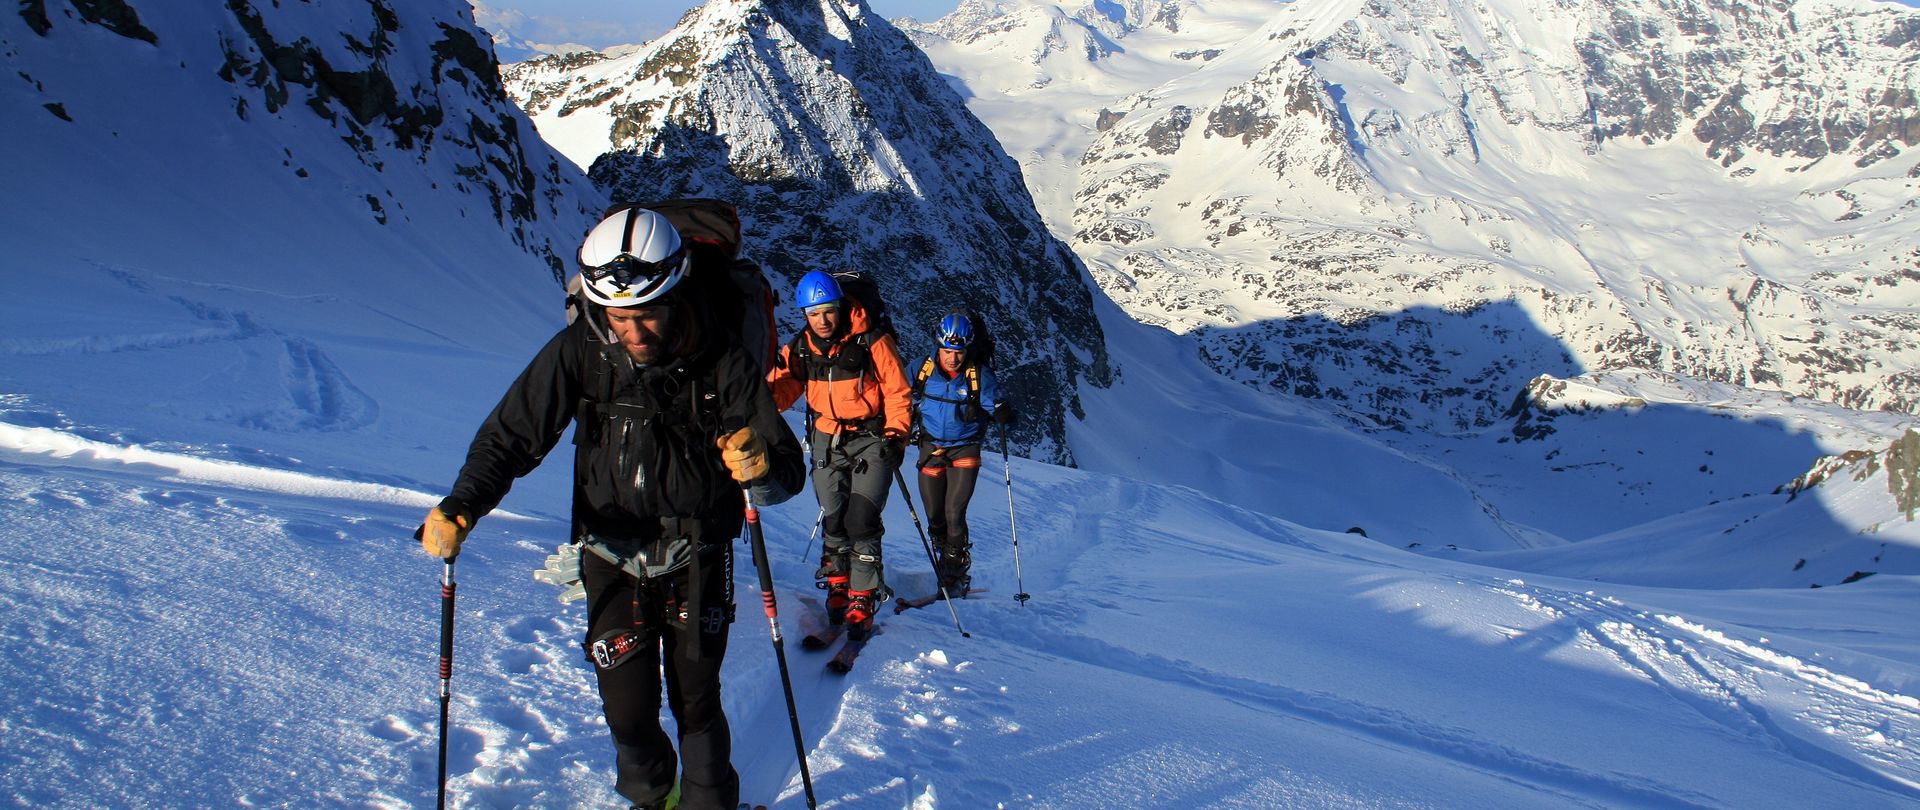 Chamonix - Zermatt version expert